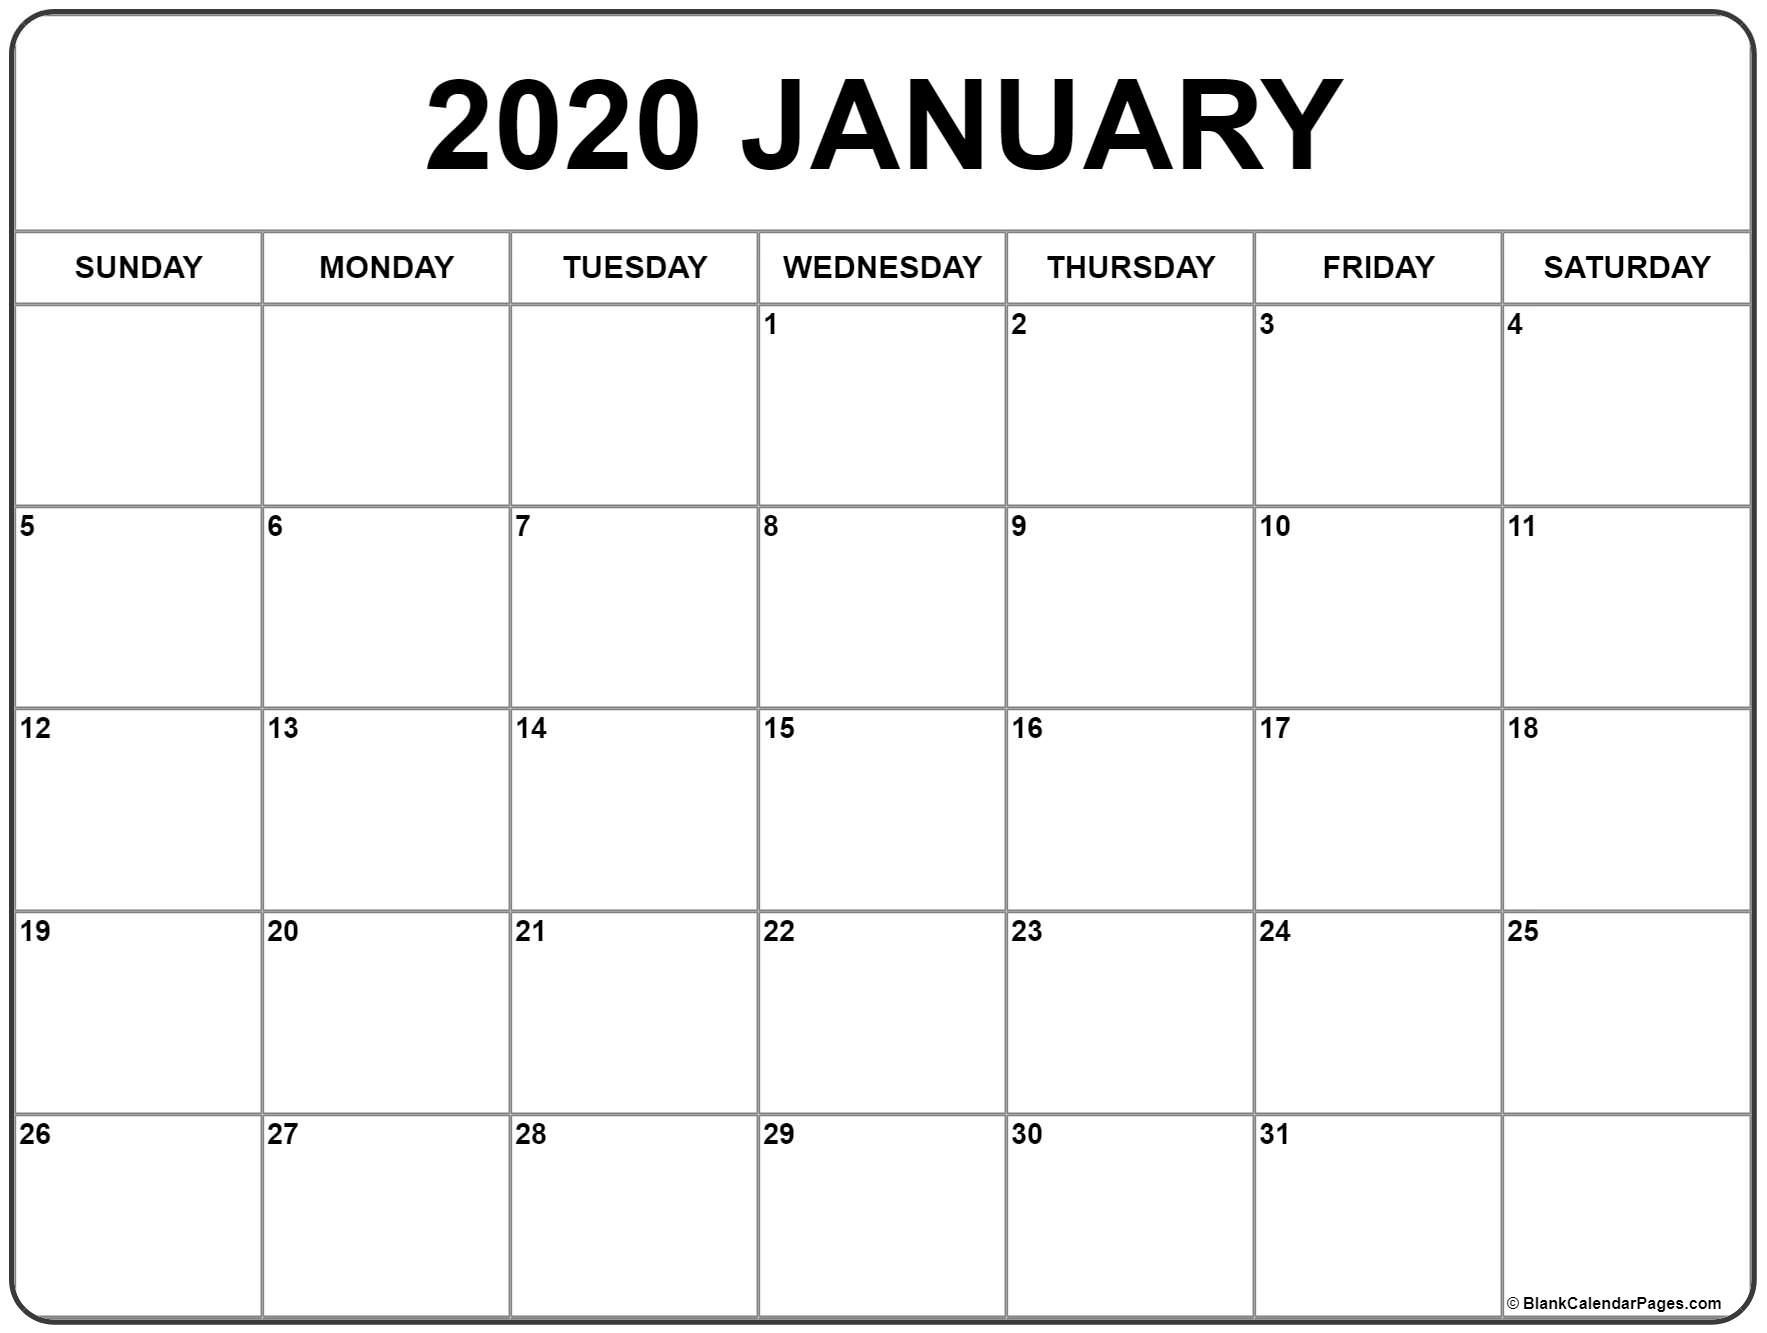 January 2020 Calendar | Free Printable Monthly Calendars Free Calendar Online Template